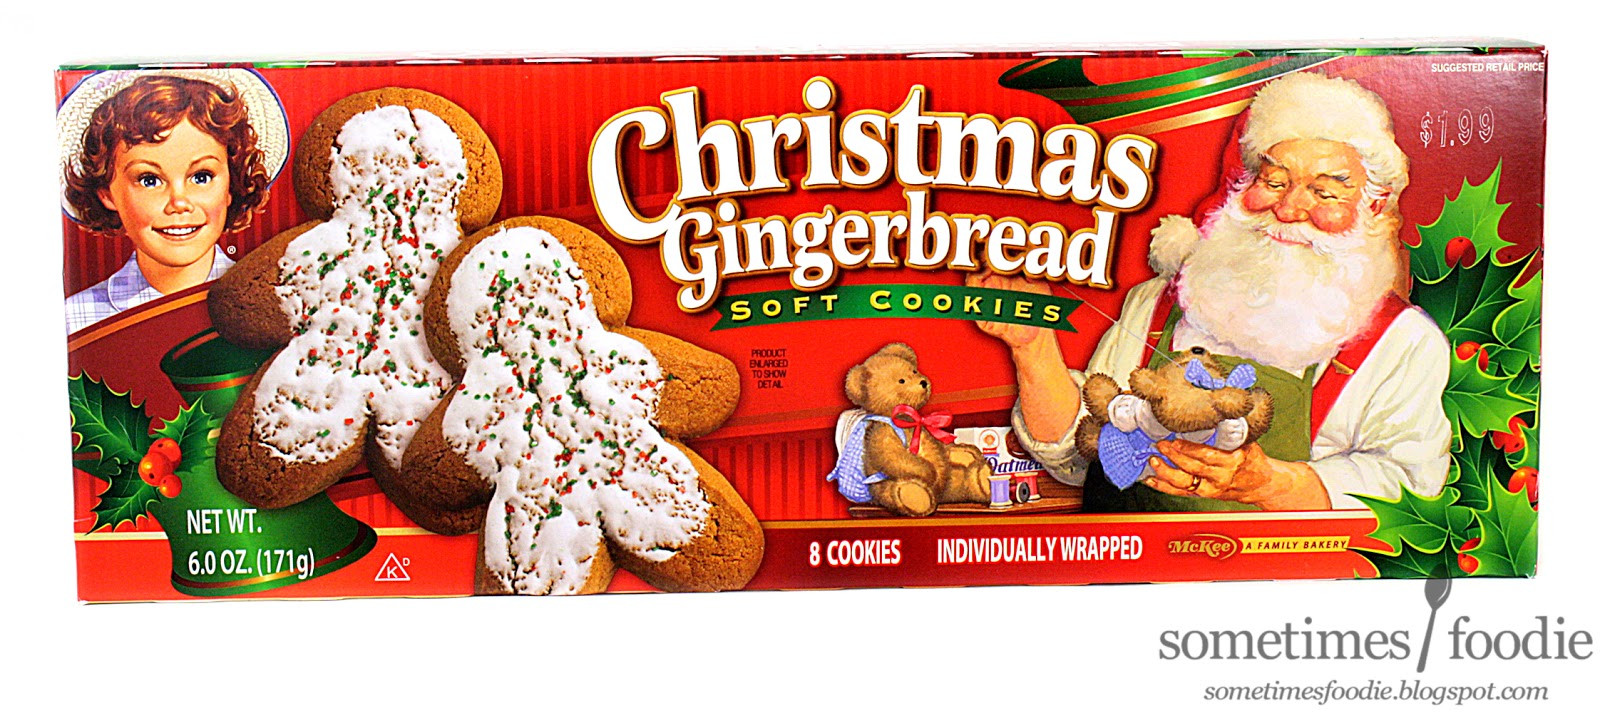 Walmart Christmas Cakes
 Sometimes Foo Christmas Gingerbread Soft Cookies Walmart